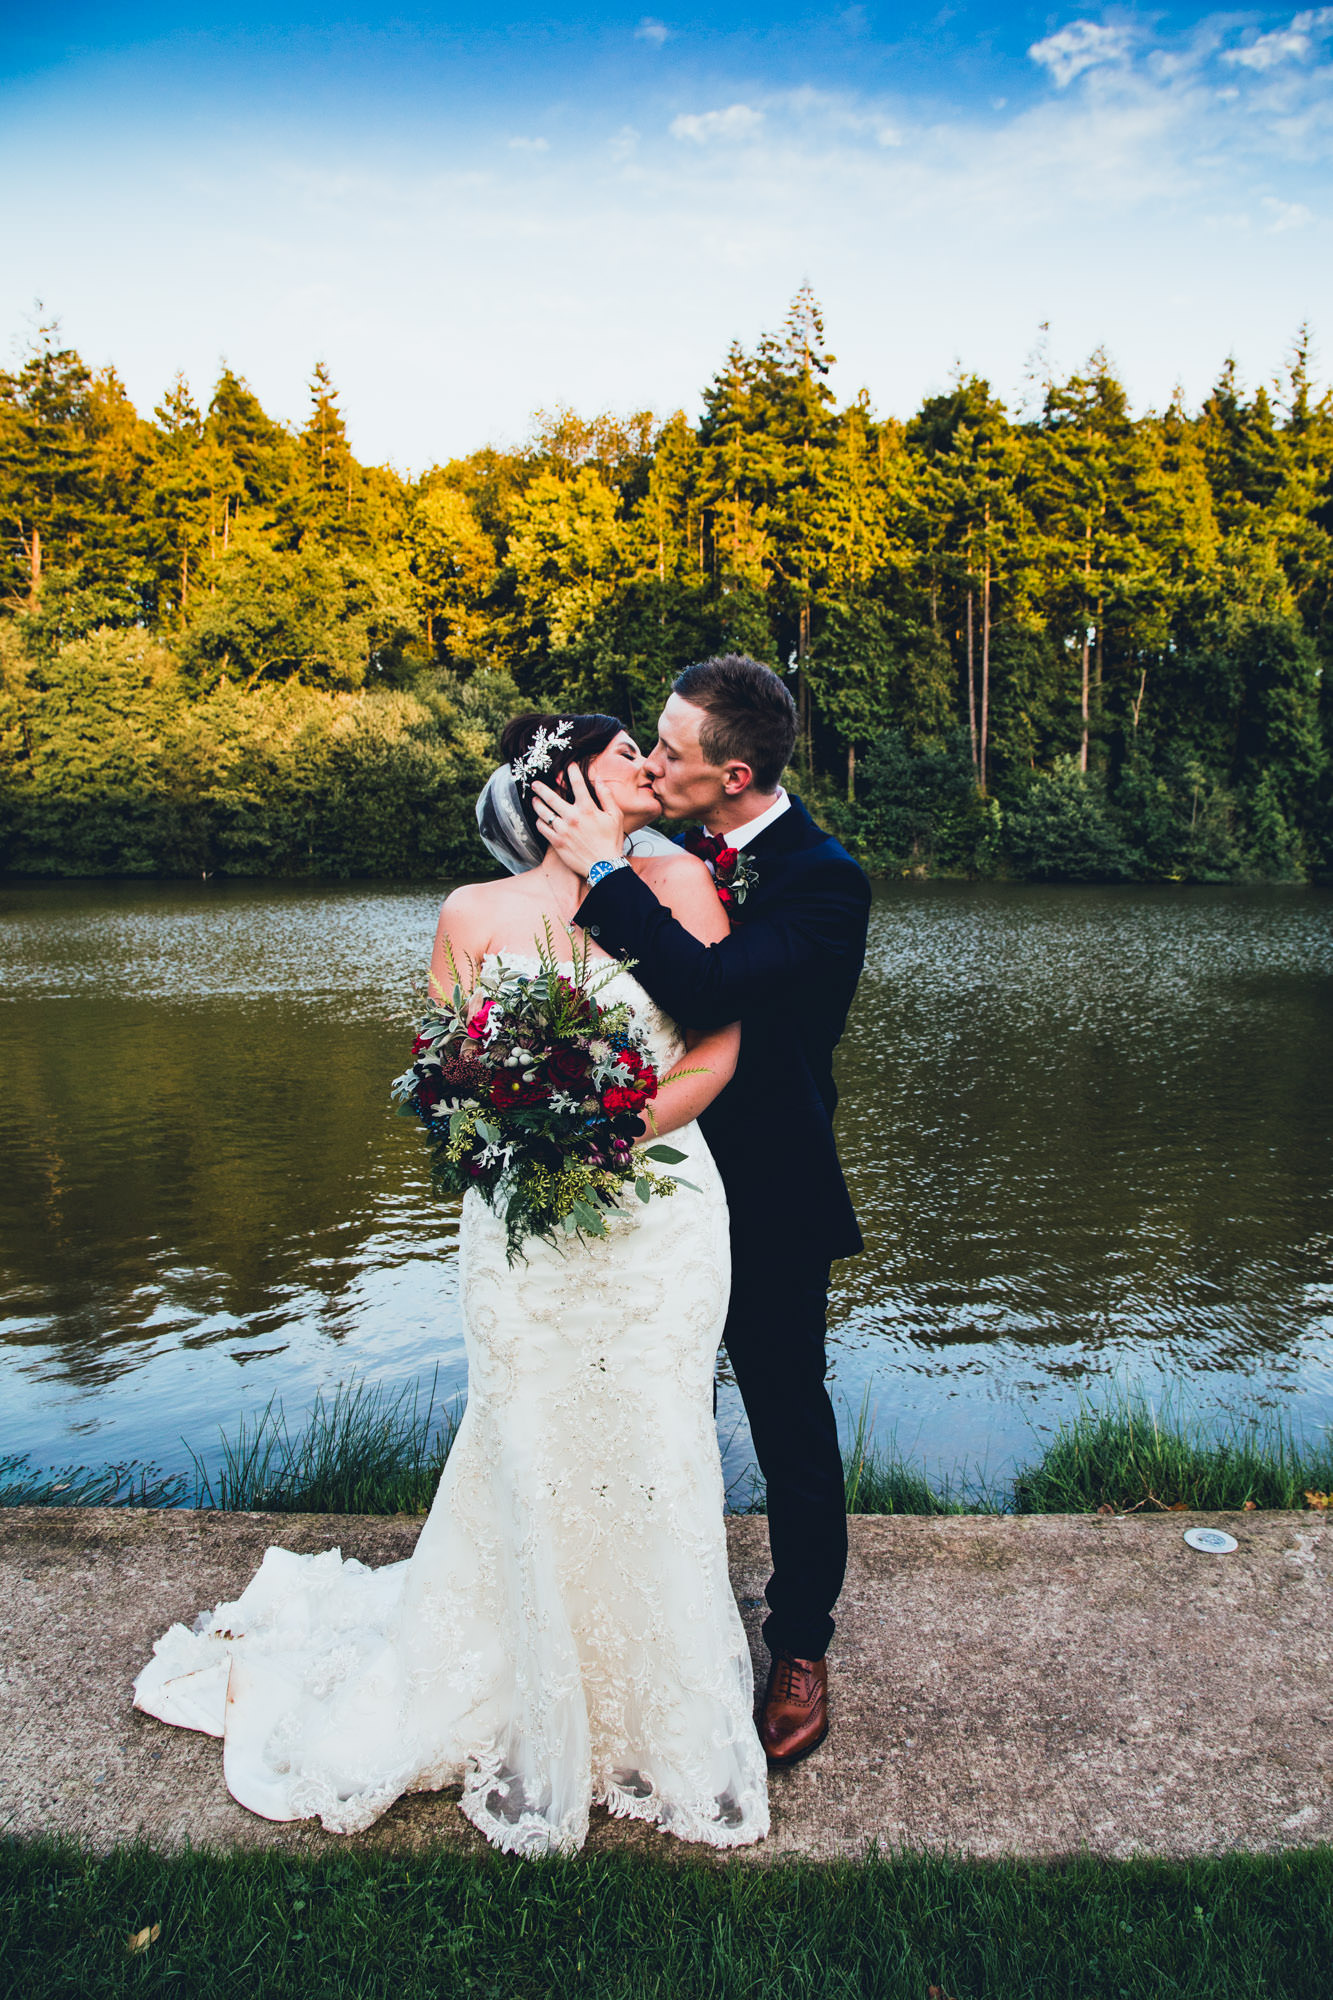 Canada Lodge and lake wedding photography 2019_7402.jpg